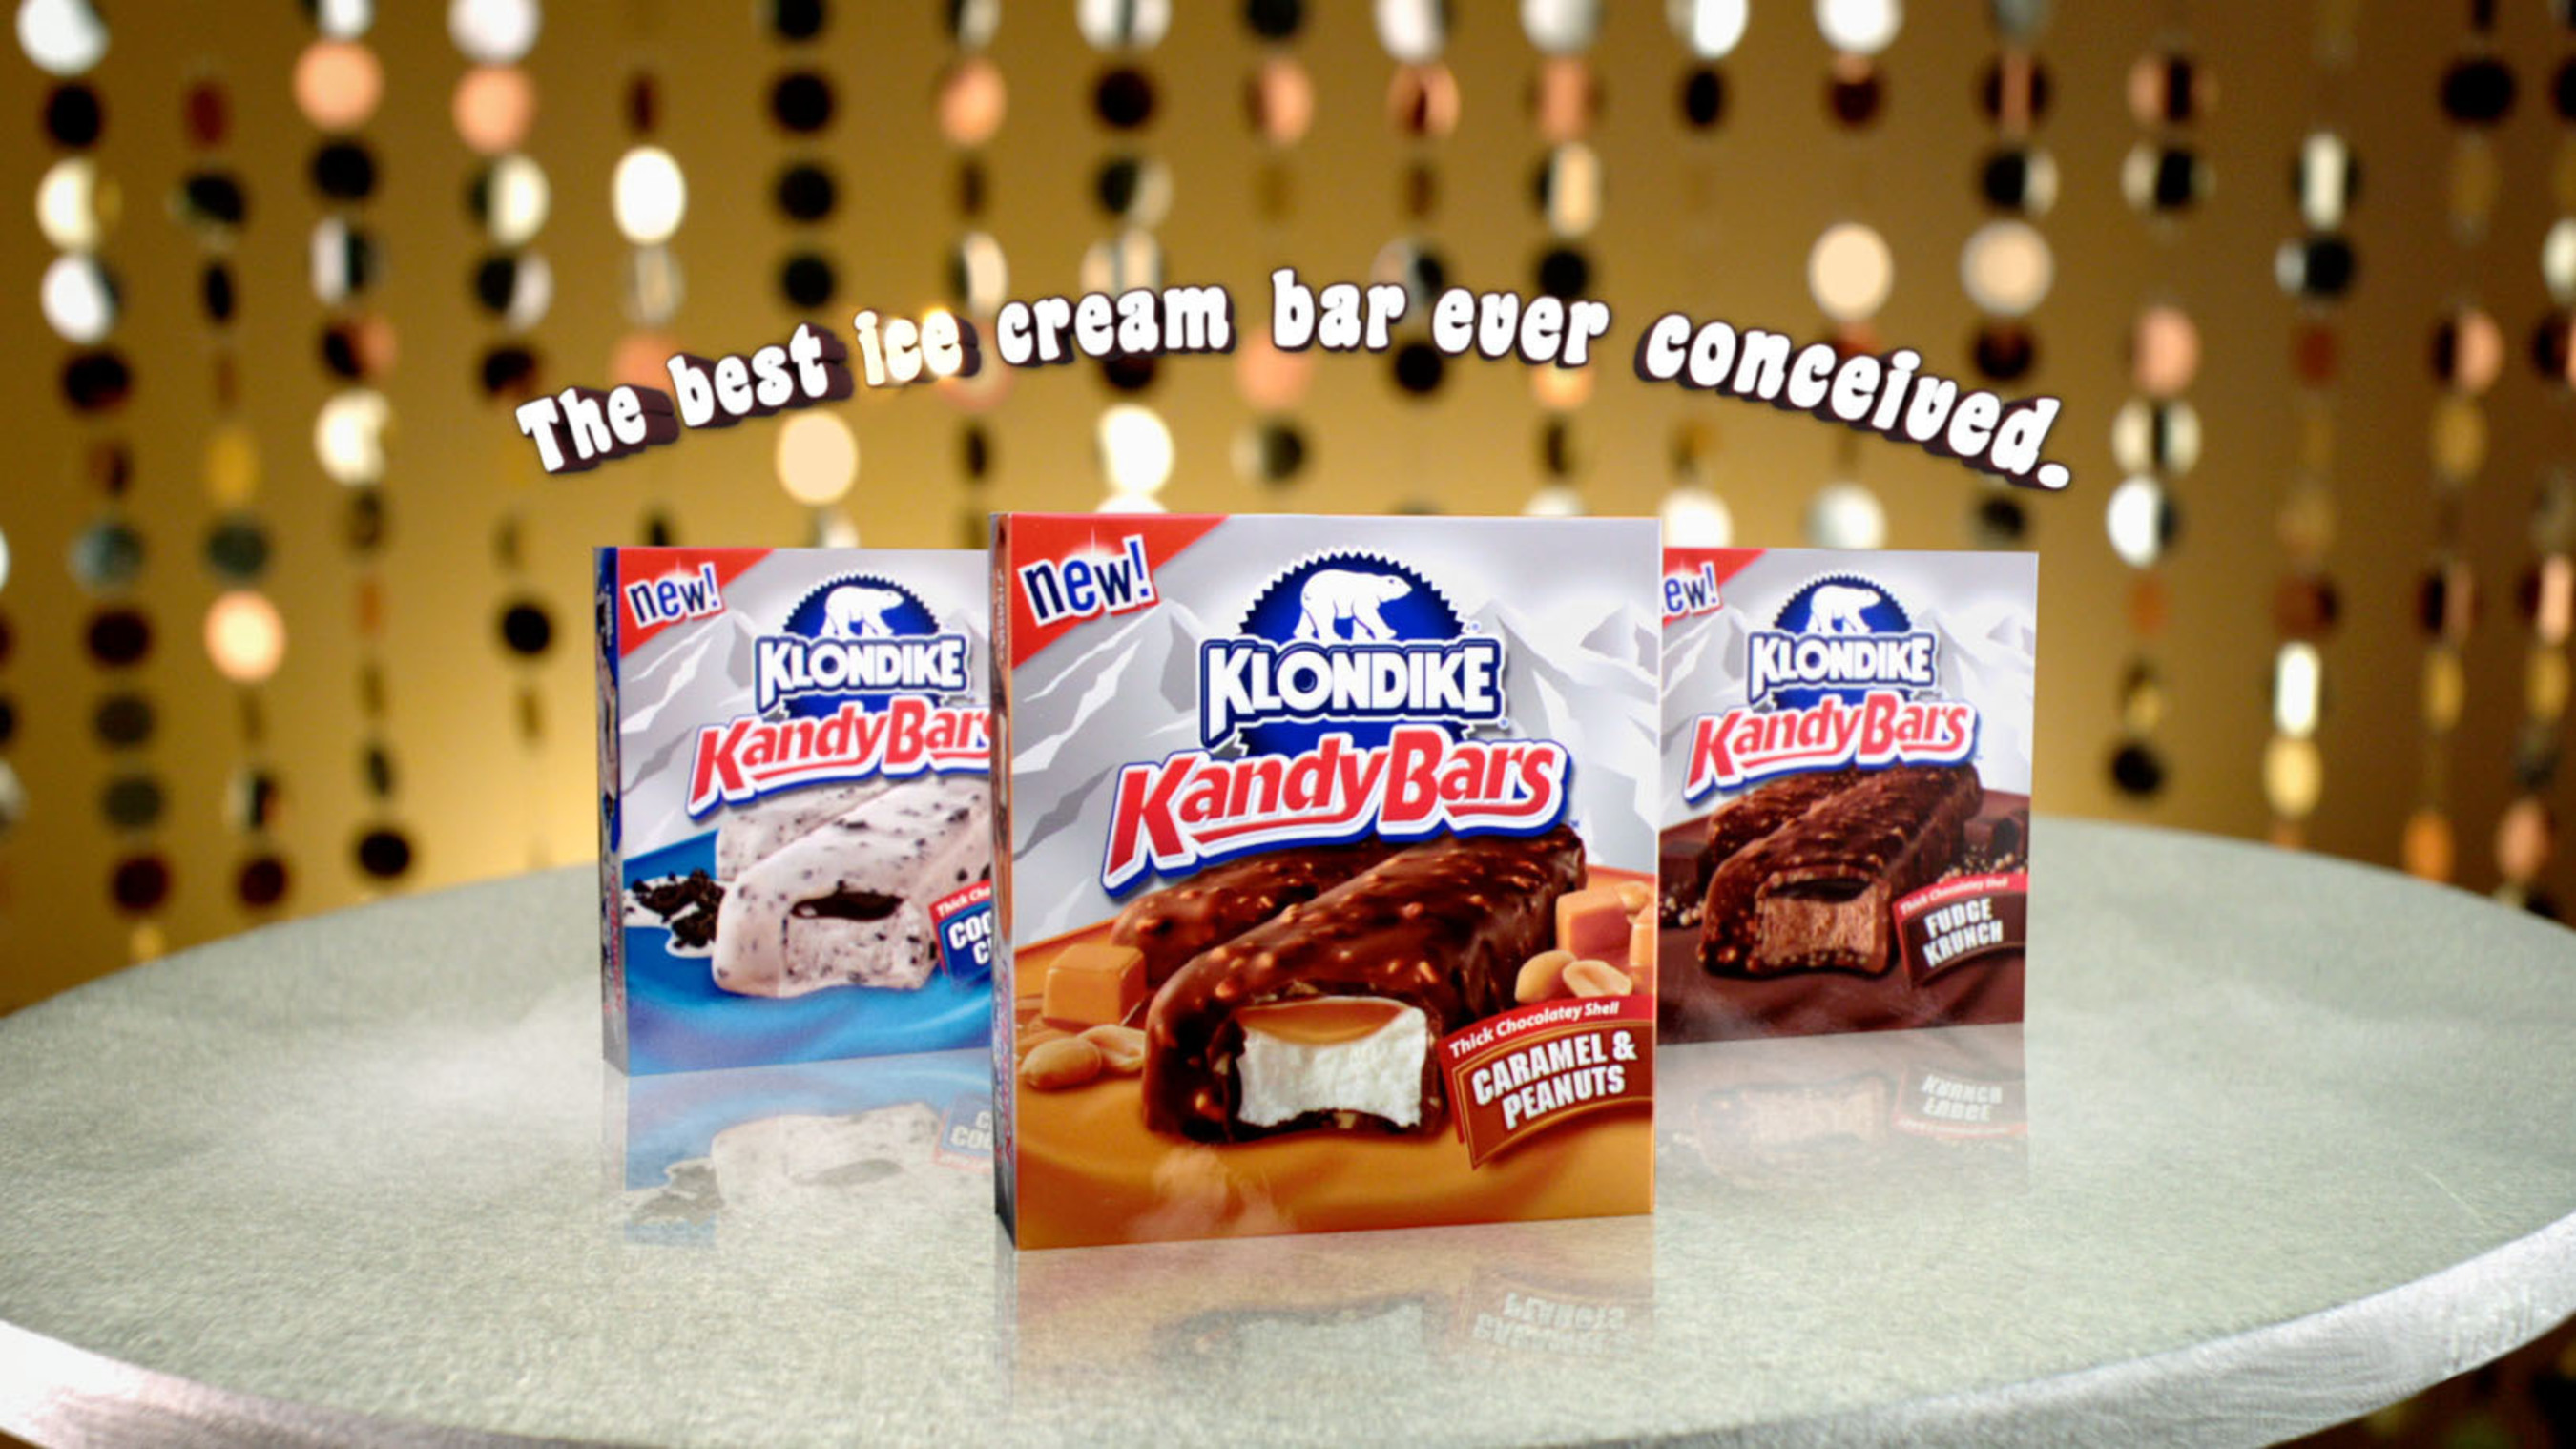 KLONDIKE(R) INTRODUCES THE BEST ICE CREAM BAR EVER CONCEIVED! (PRNewsFoto/Unilever) (PRNewsFoto/UNILEVER)